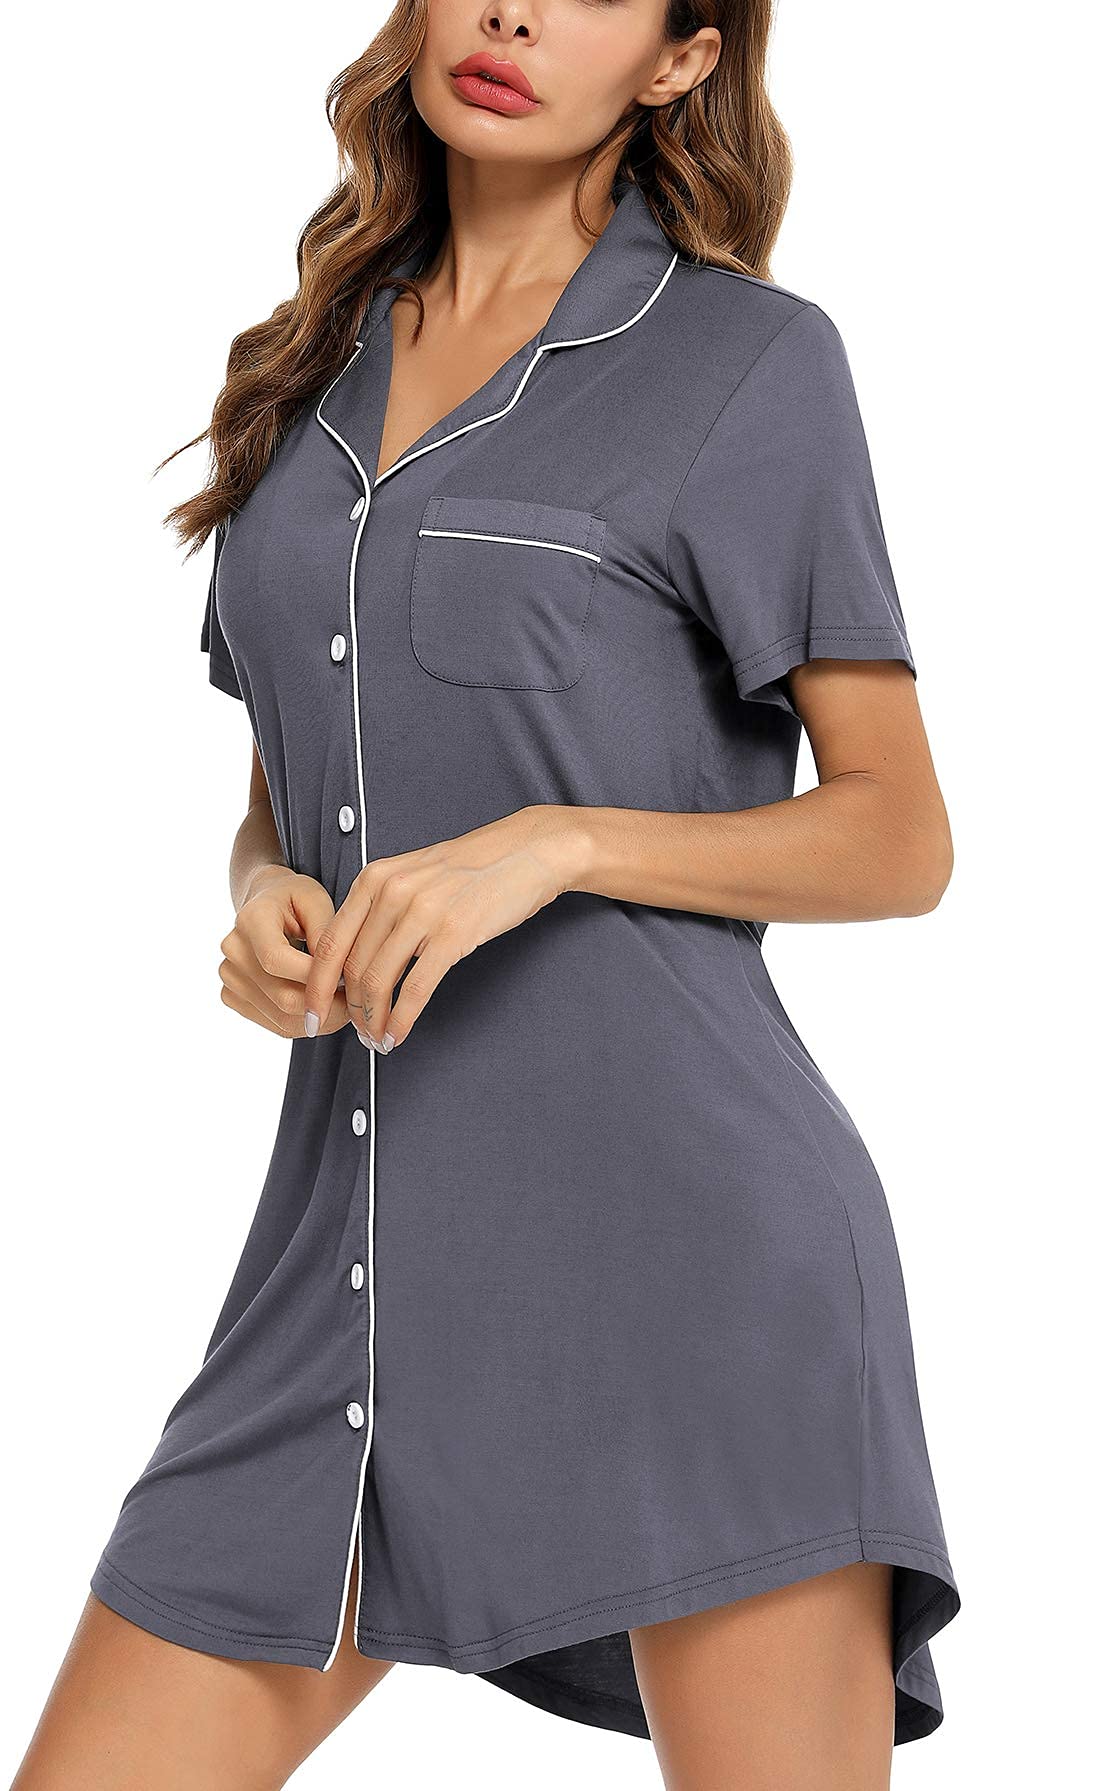 Samring Womens Sleep Shirt Short Sleeve Sleepwear Nightshirt Button Down  Pajama Top gray XL